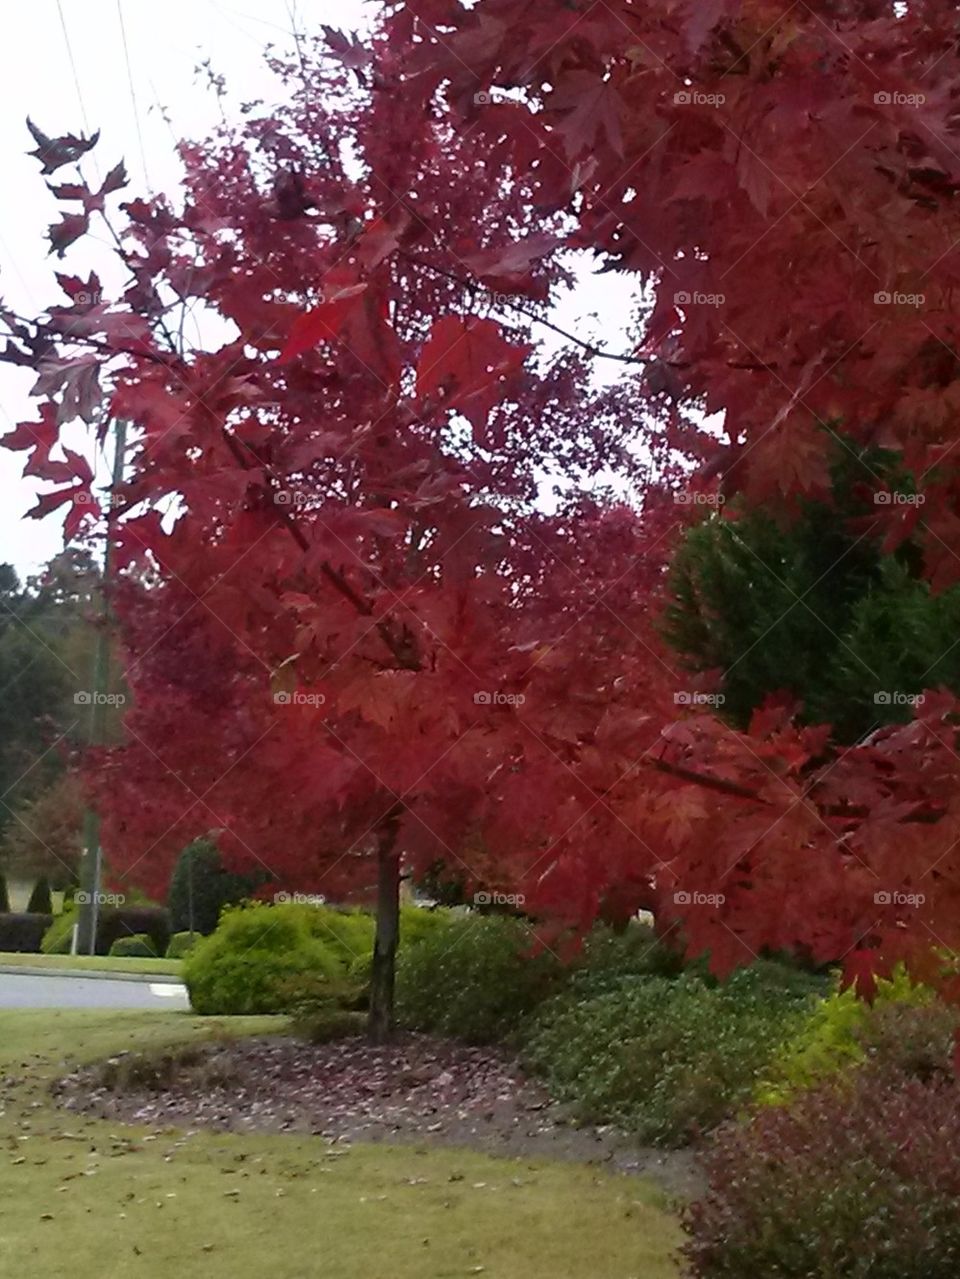 Fall Reds